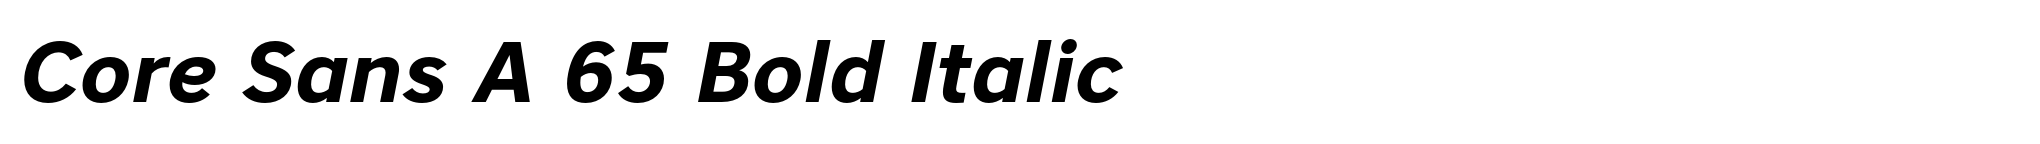 Core Sans A 65 Bold Italic image